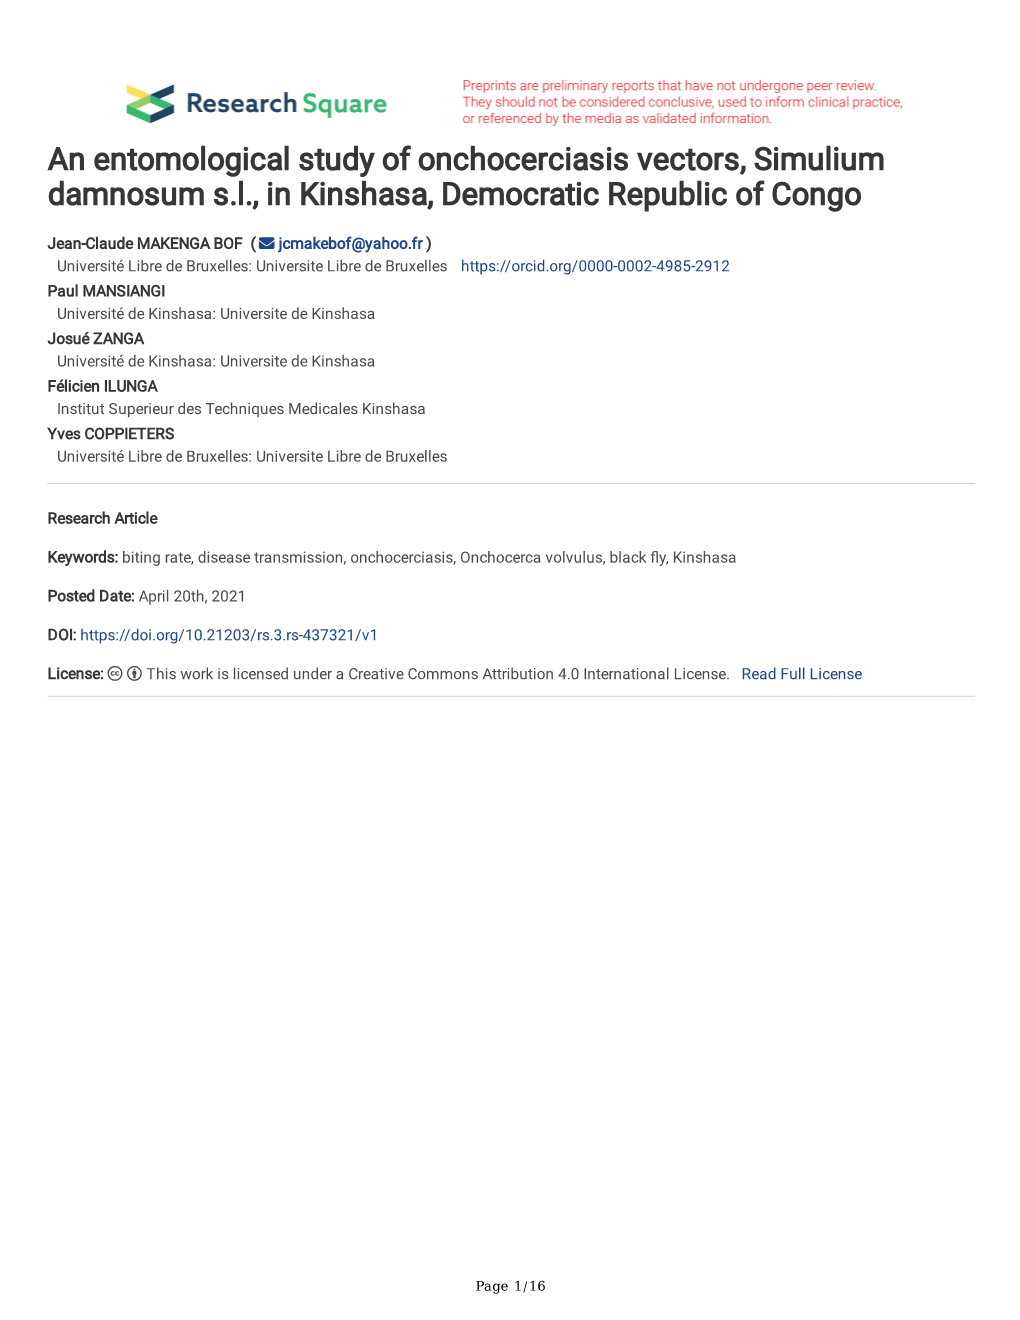 An Entomological Study of Onchocerciasis Vectors, Simulium Damnosum S.L., in Kinshasa, Democratic Republic of Congo